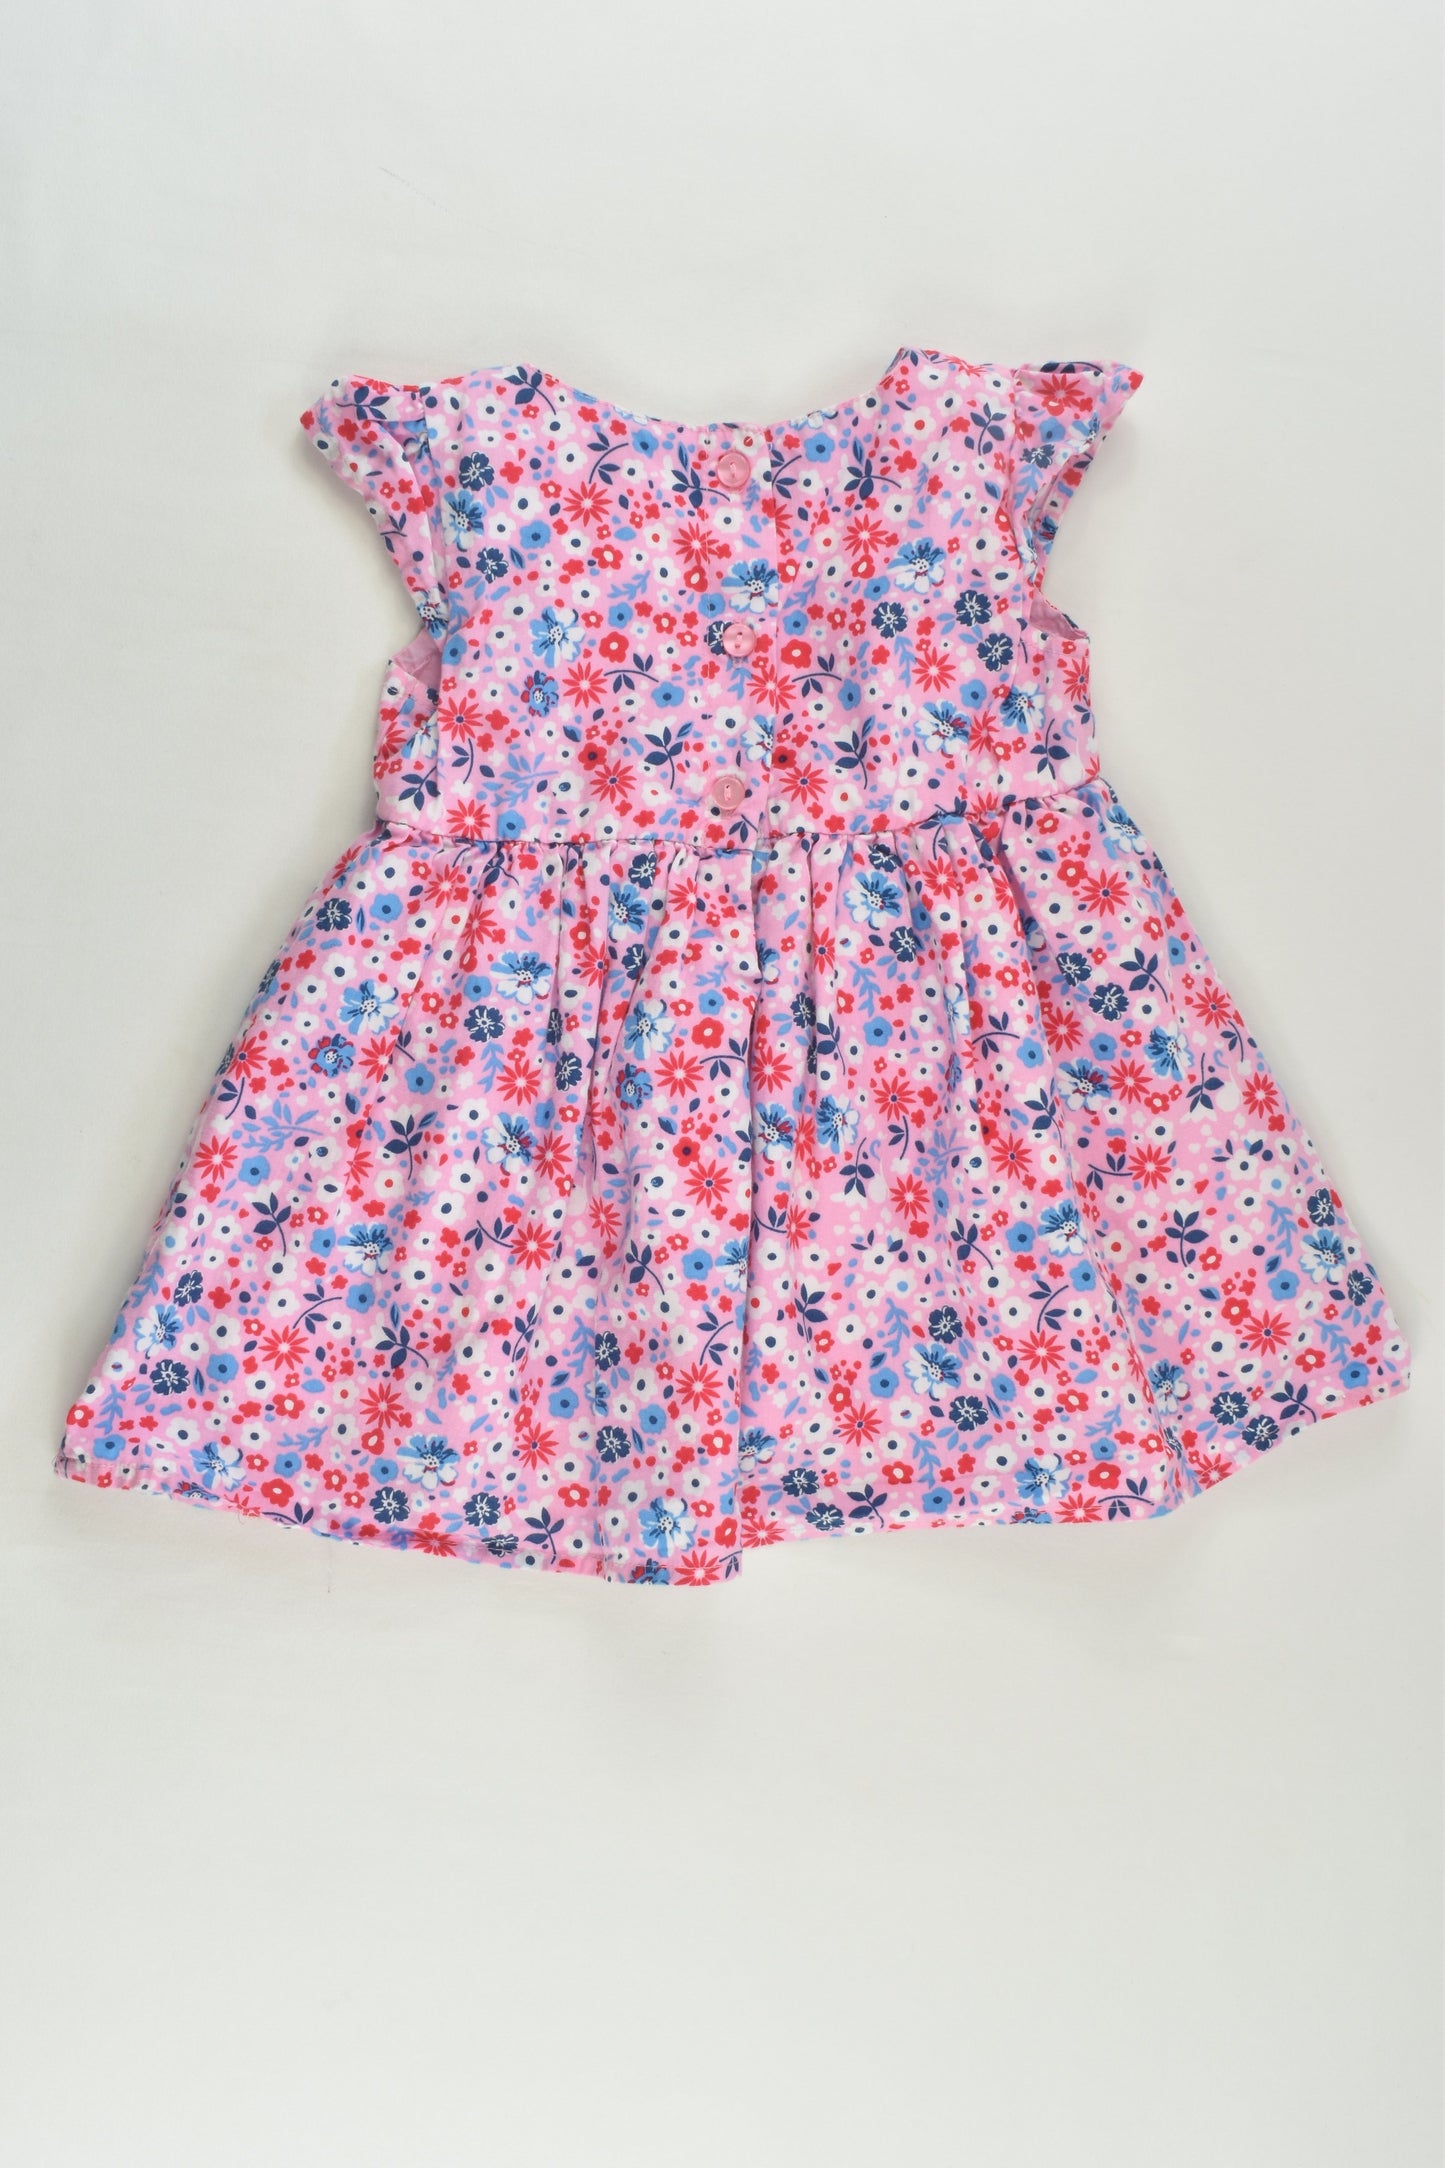 Pink & Blue Size 0 (6-12 months) Lined Floral Dress